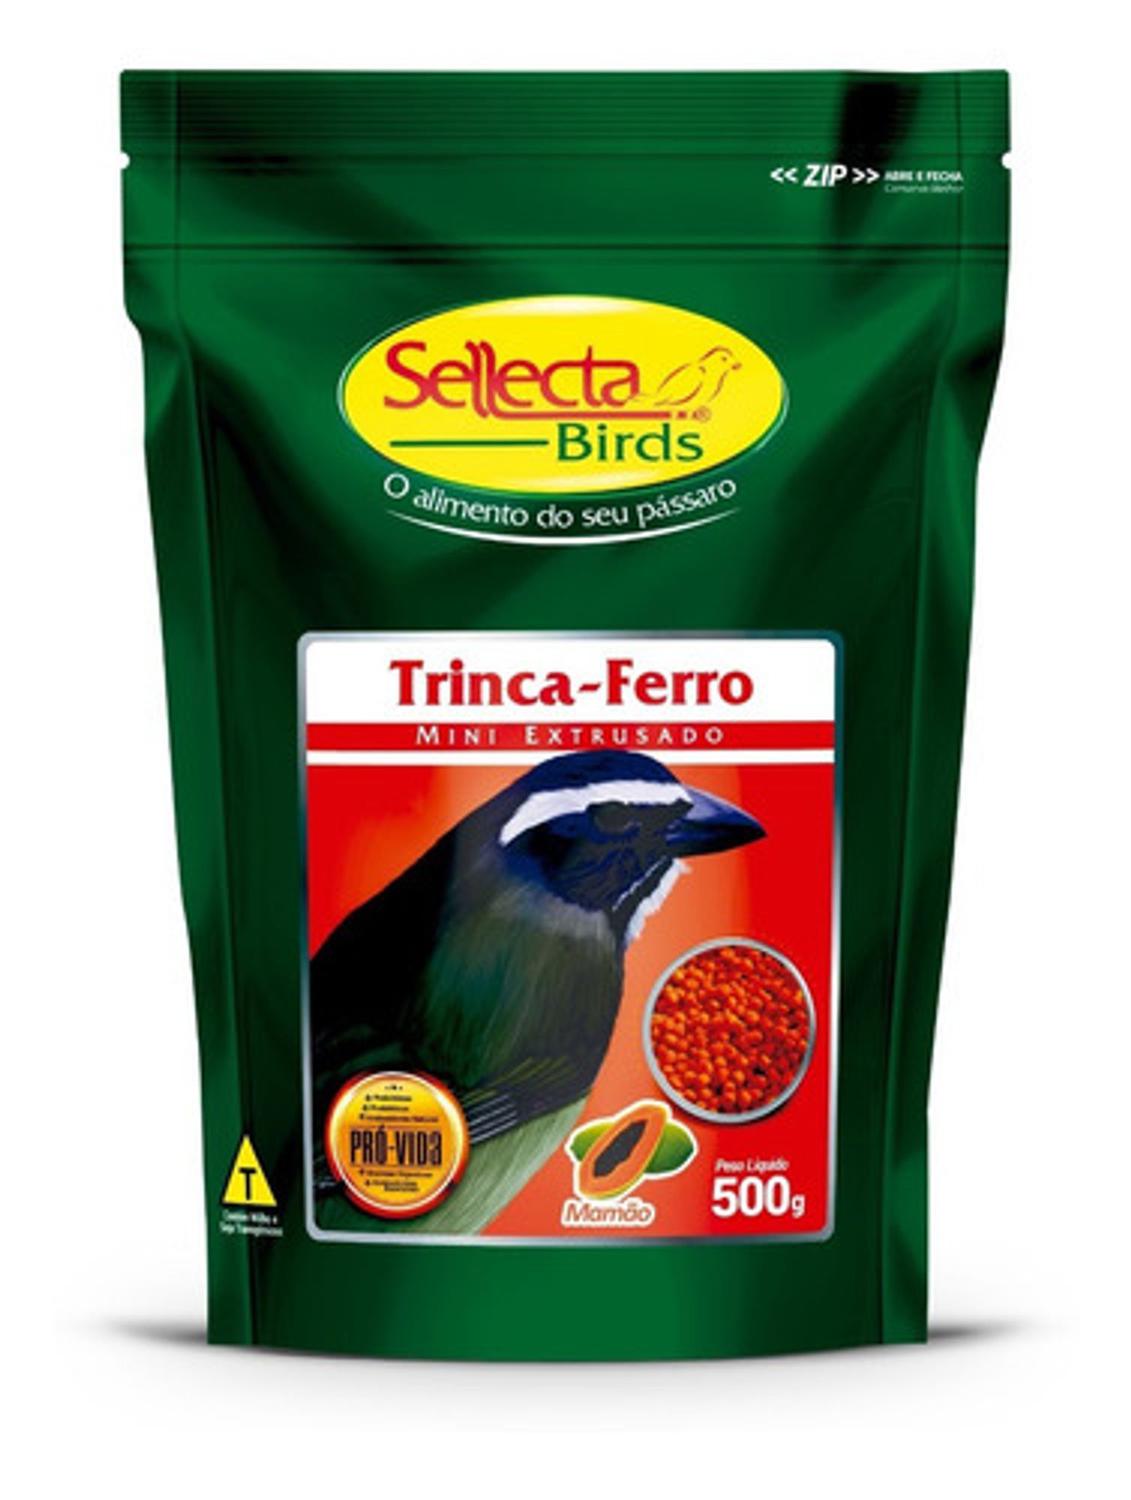 SELLECTA - TRINCA-FERRO MAMAO MINI EXTRUSADO 500G